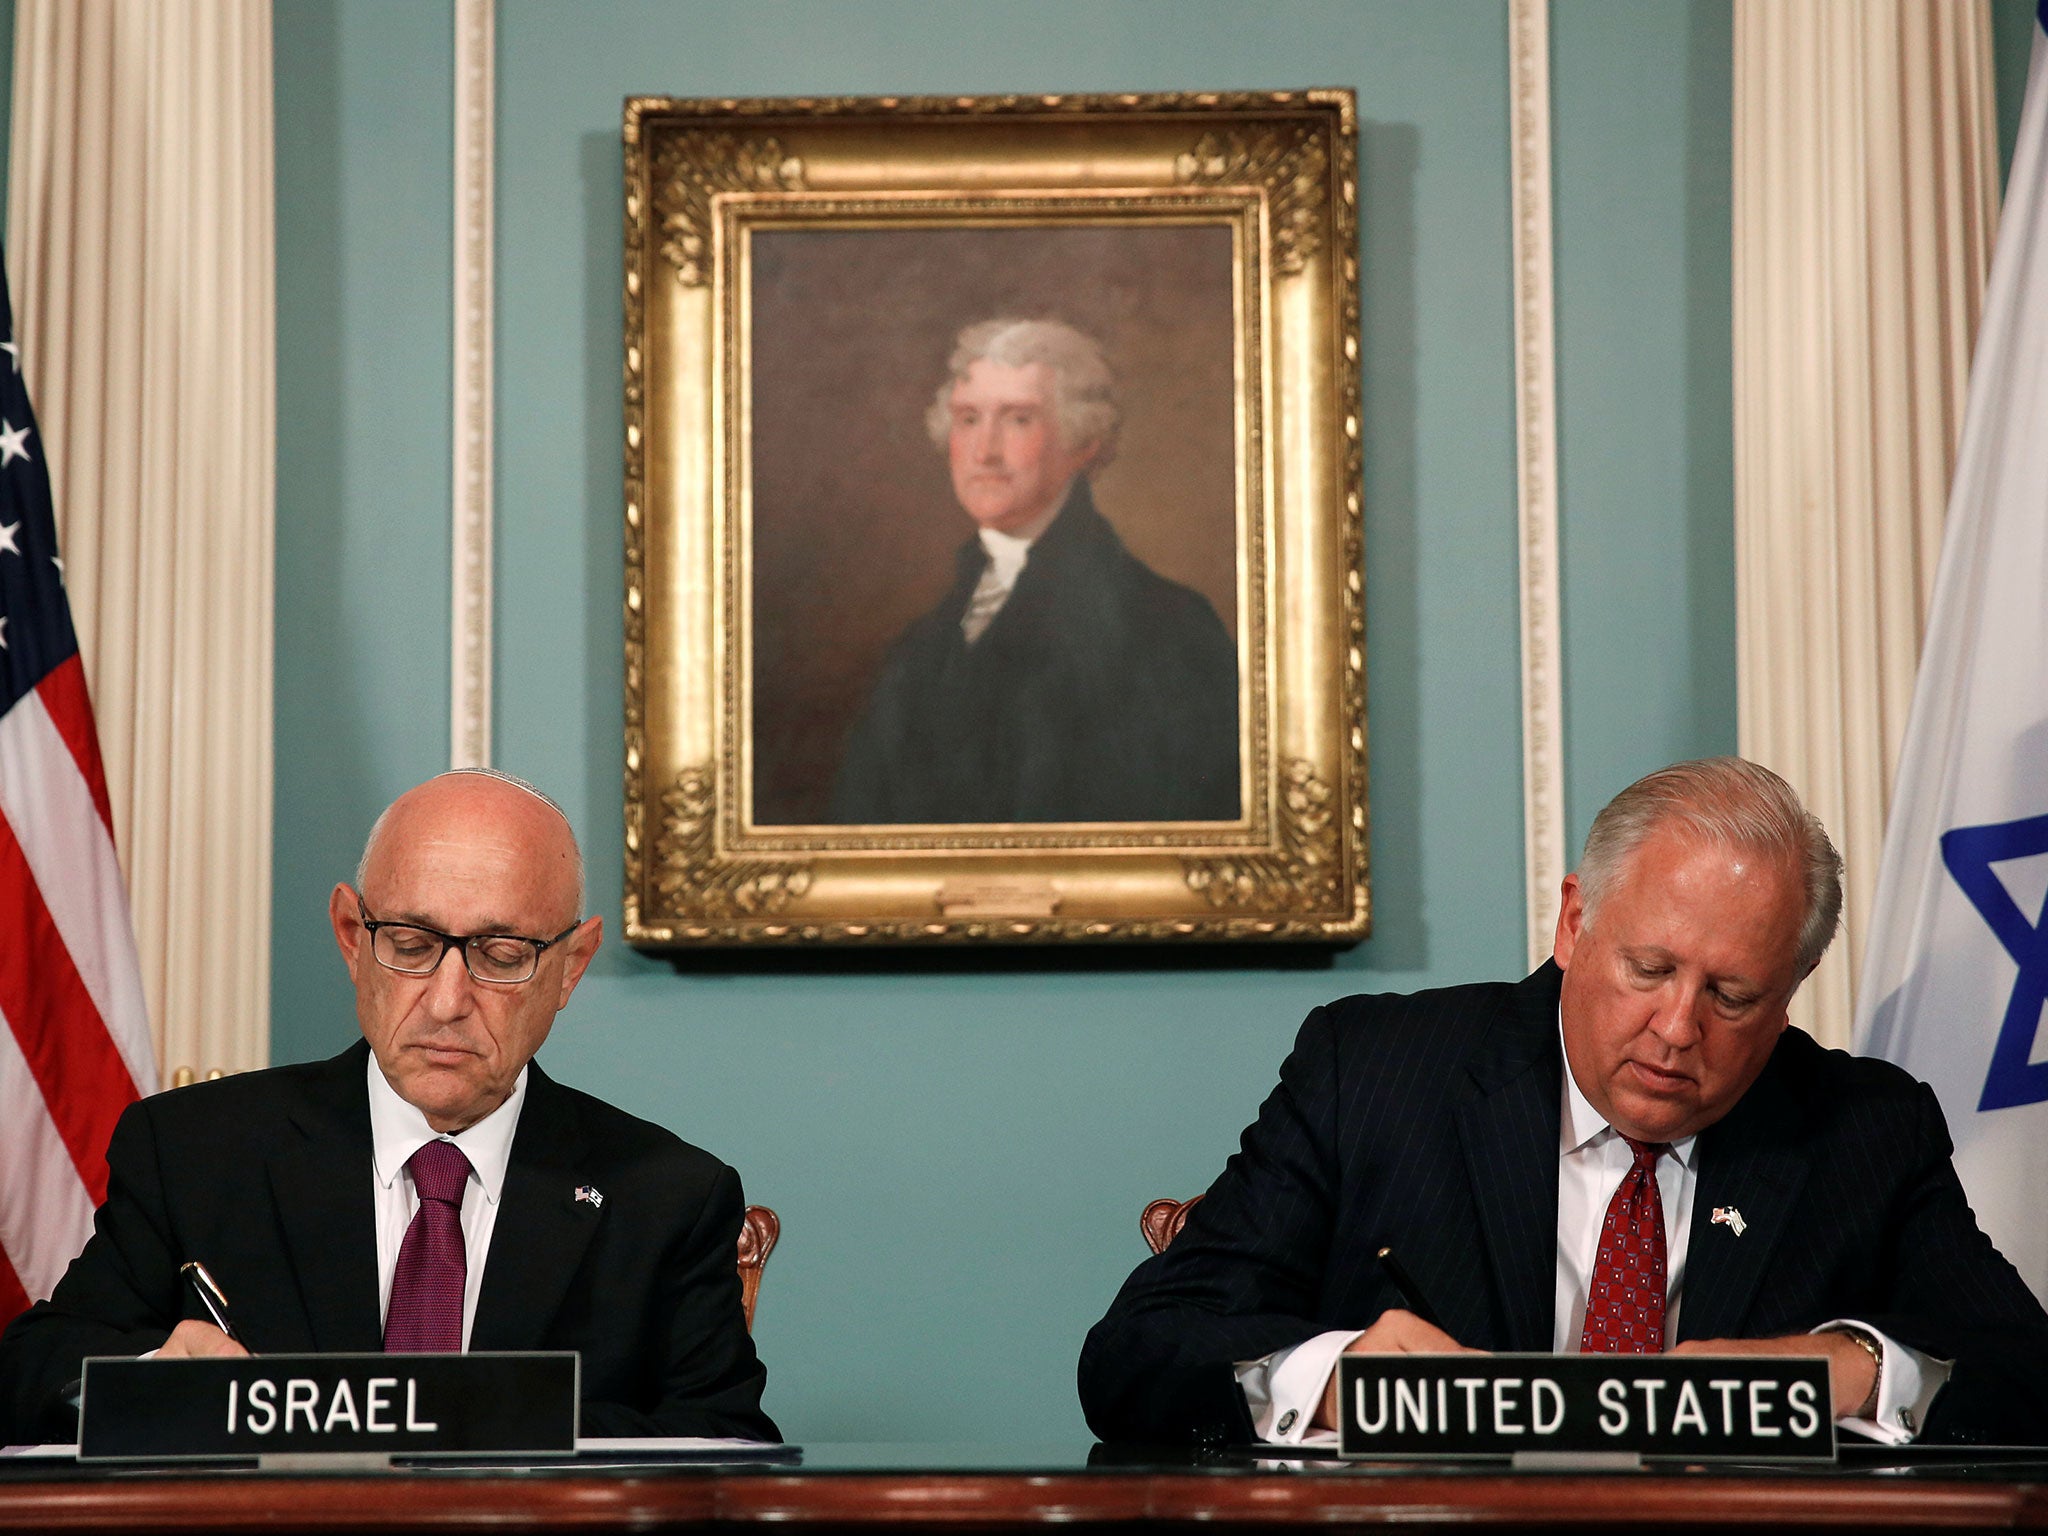 US and Israeli representatives signed the memorandum of understanding in Washington on Wednesday